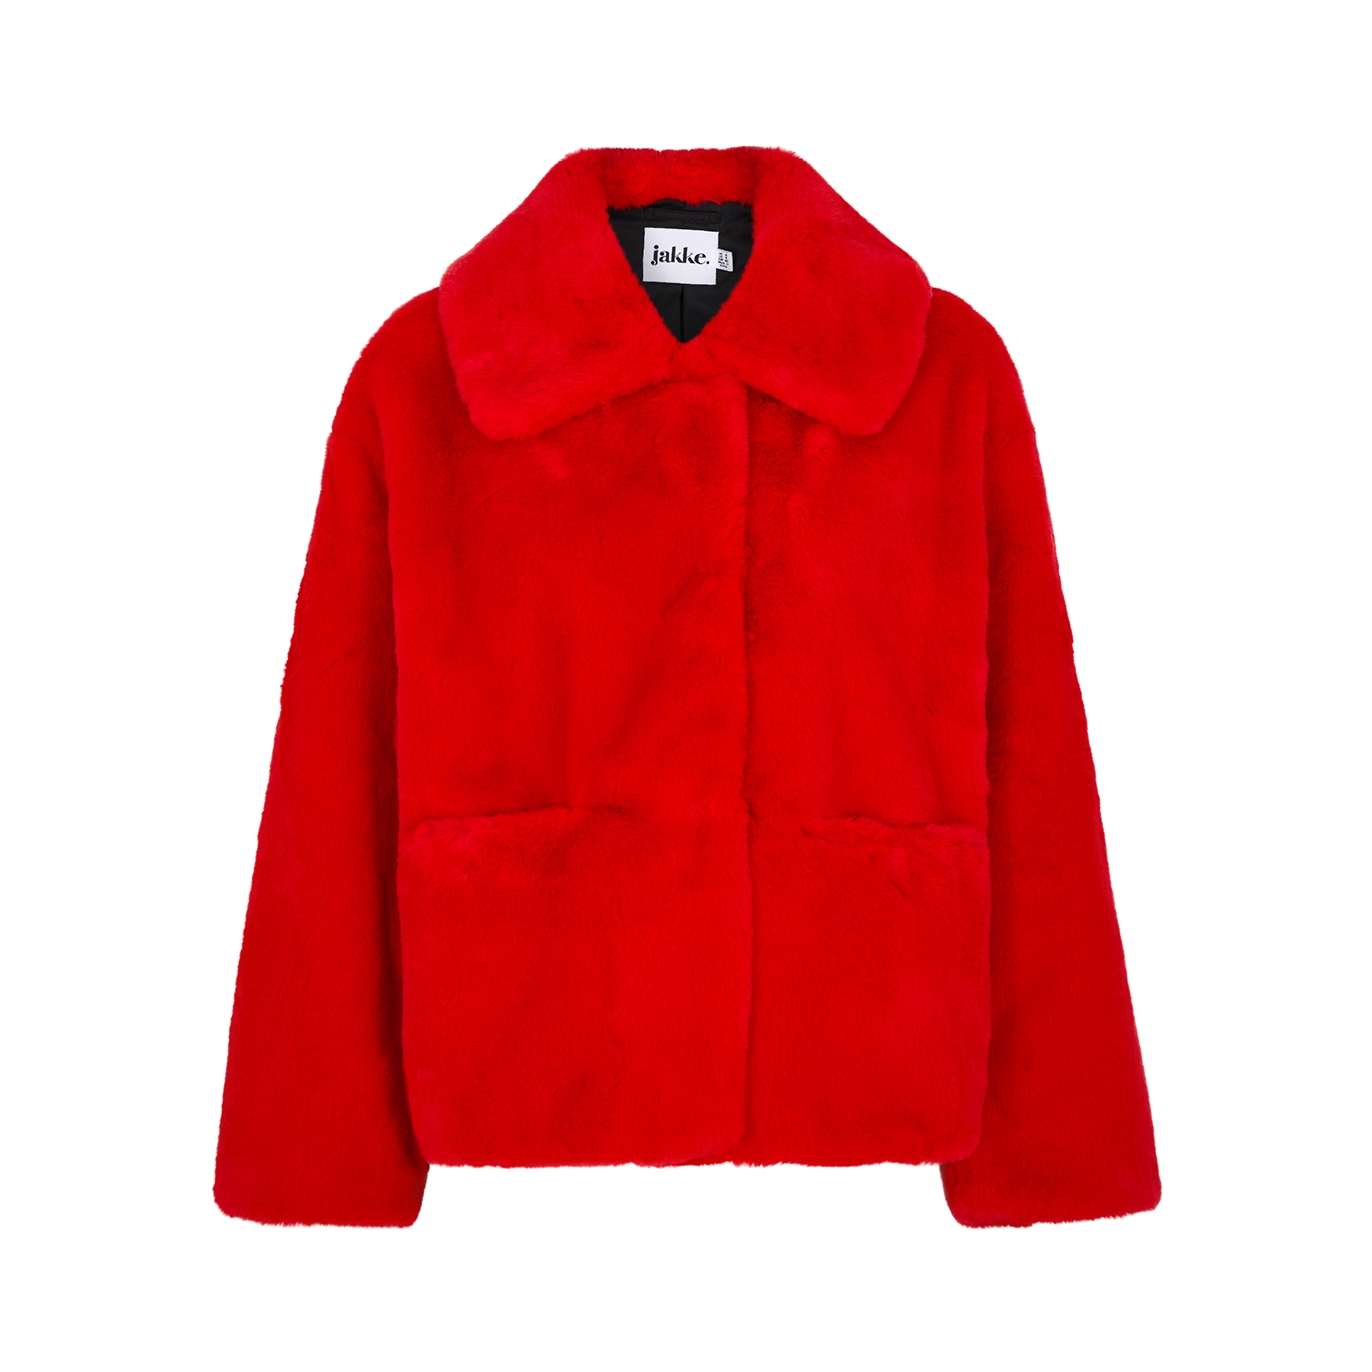 Jakke Traci Faux Fur Coat - Red - M